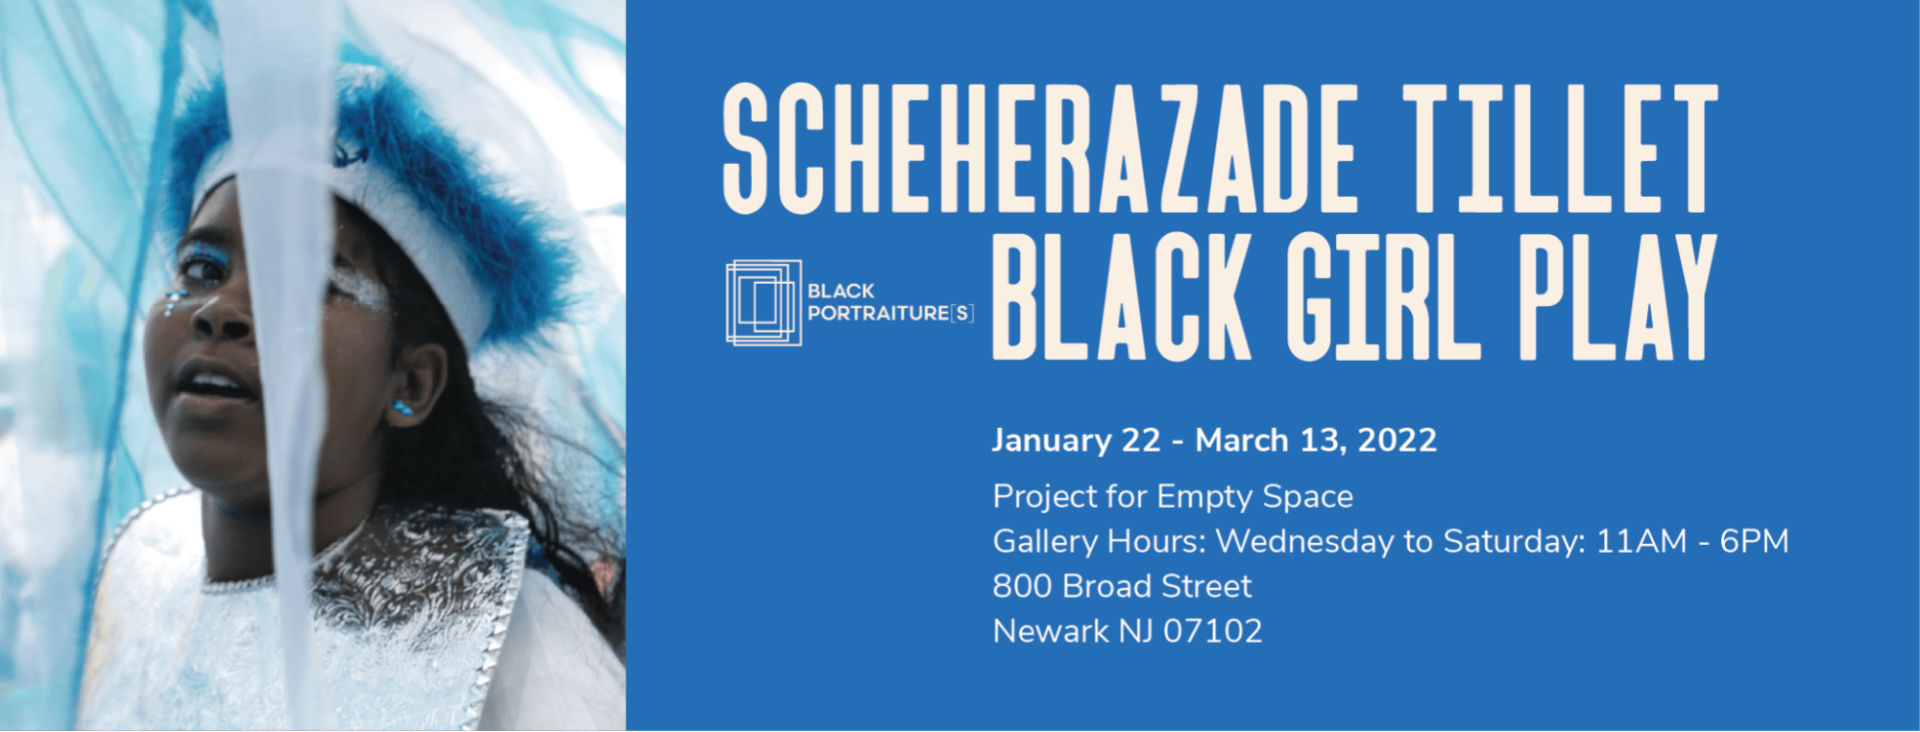 Exhibition banner for Scheherazade Tillet: Black Girl Play